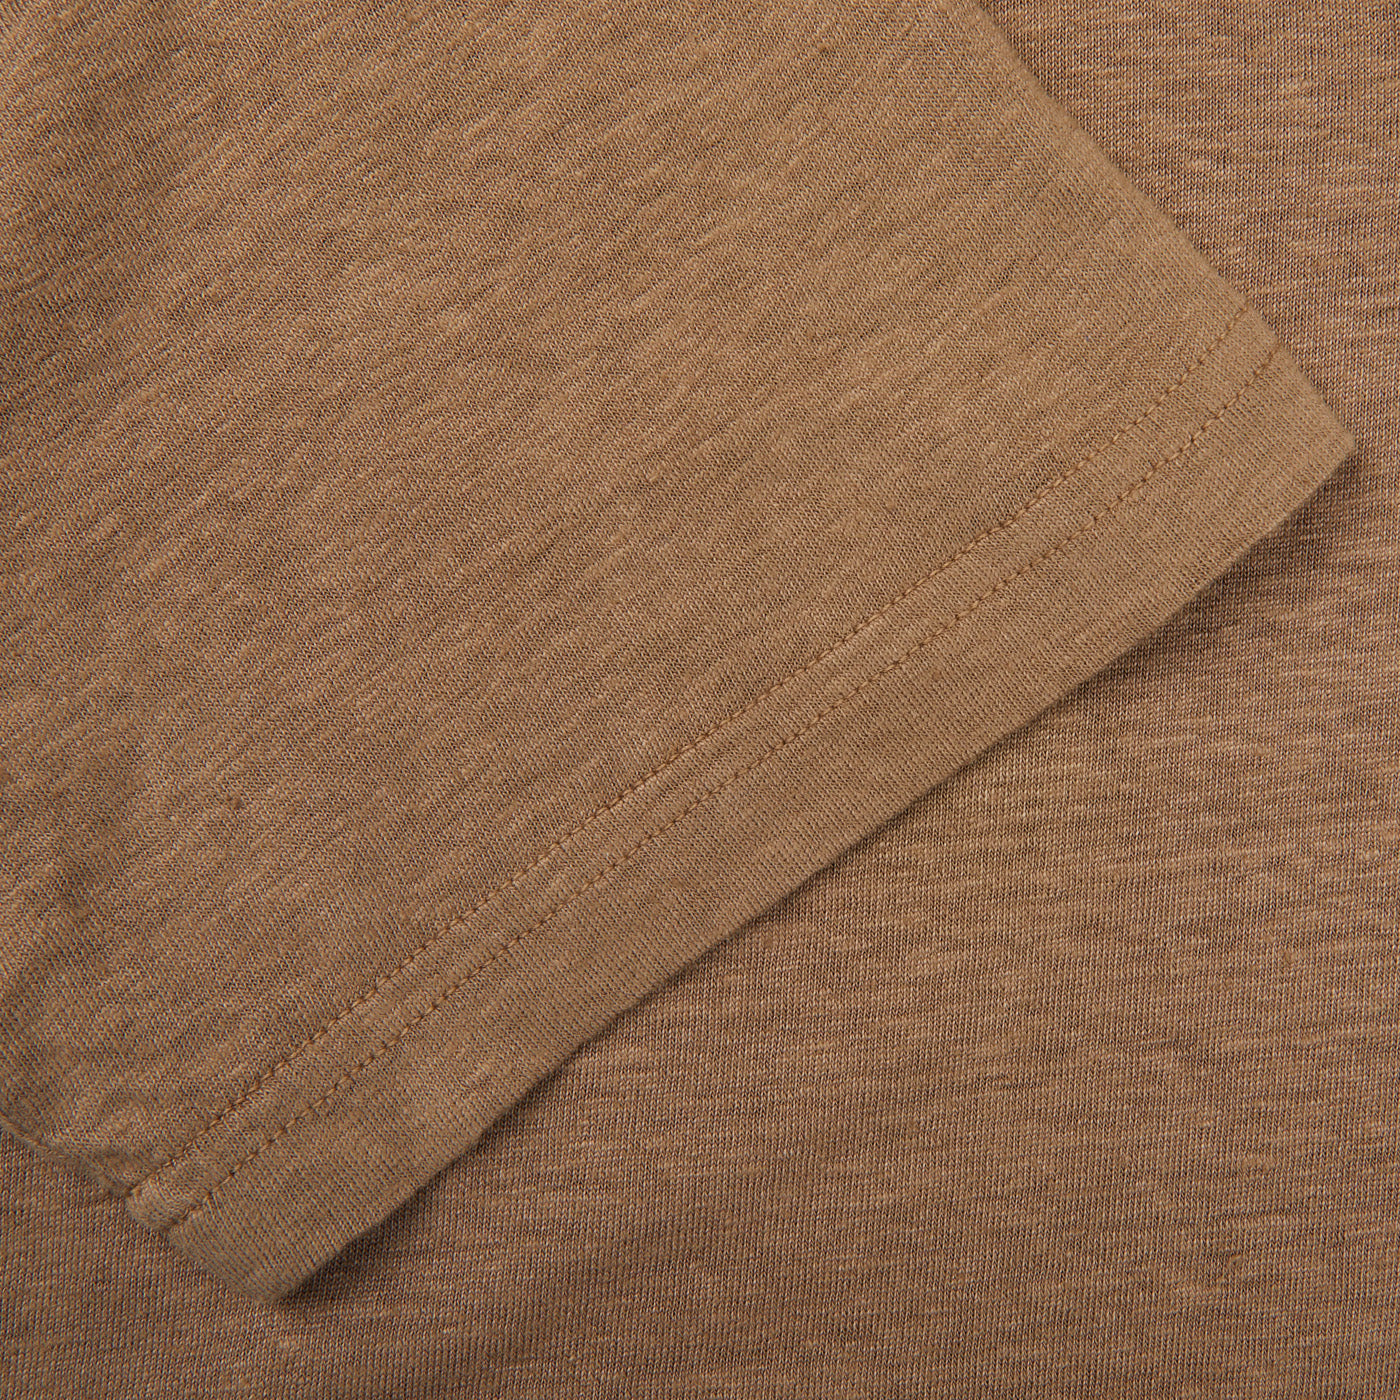 Mauro Ottaviani Cinnamon Brown Washed Linen Polo Shirt Cuff